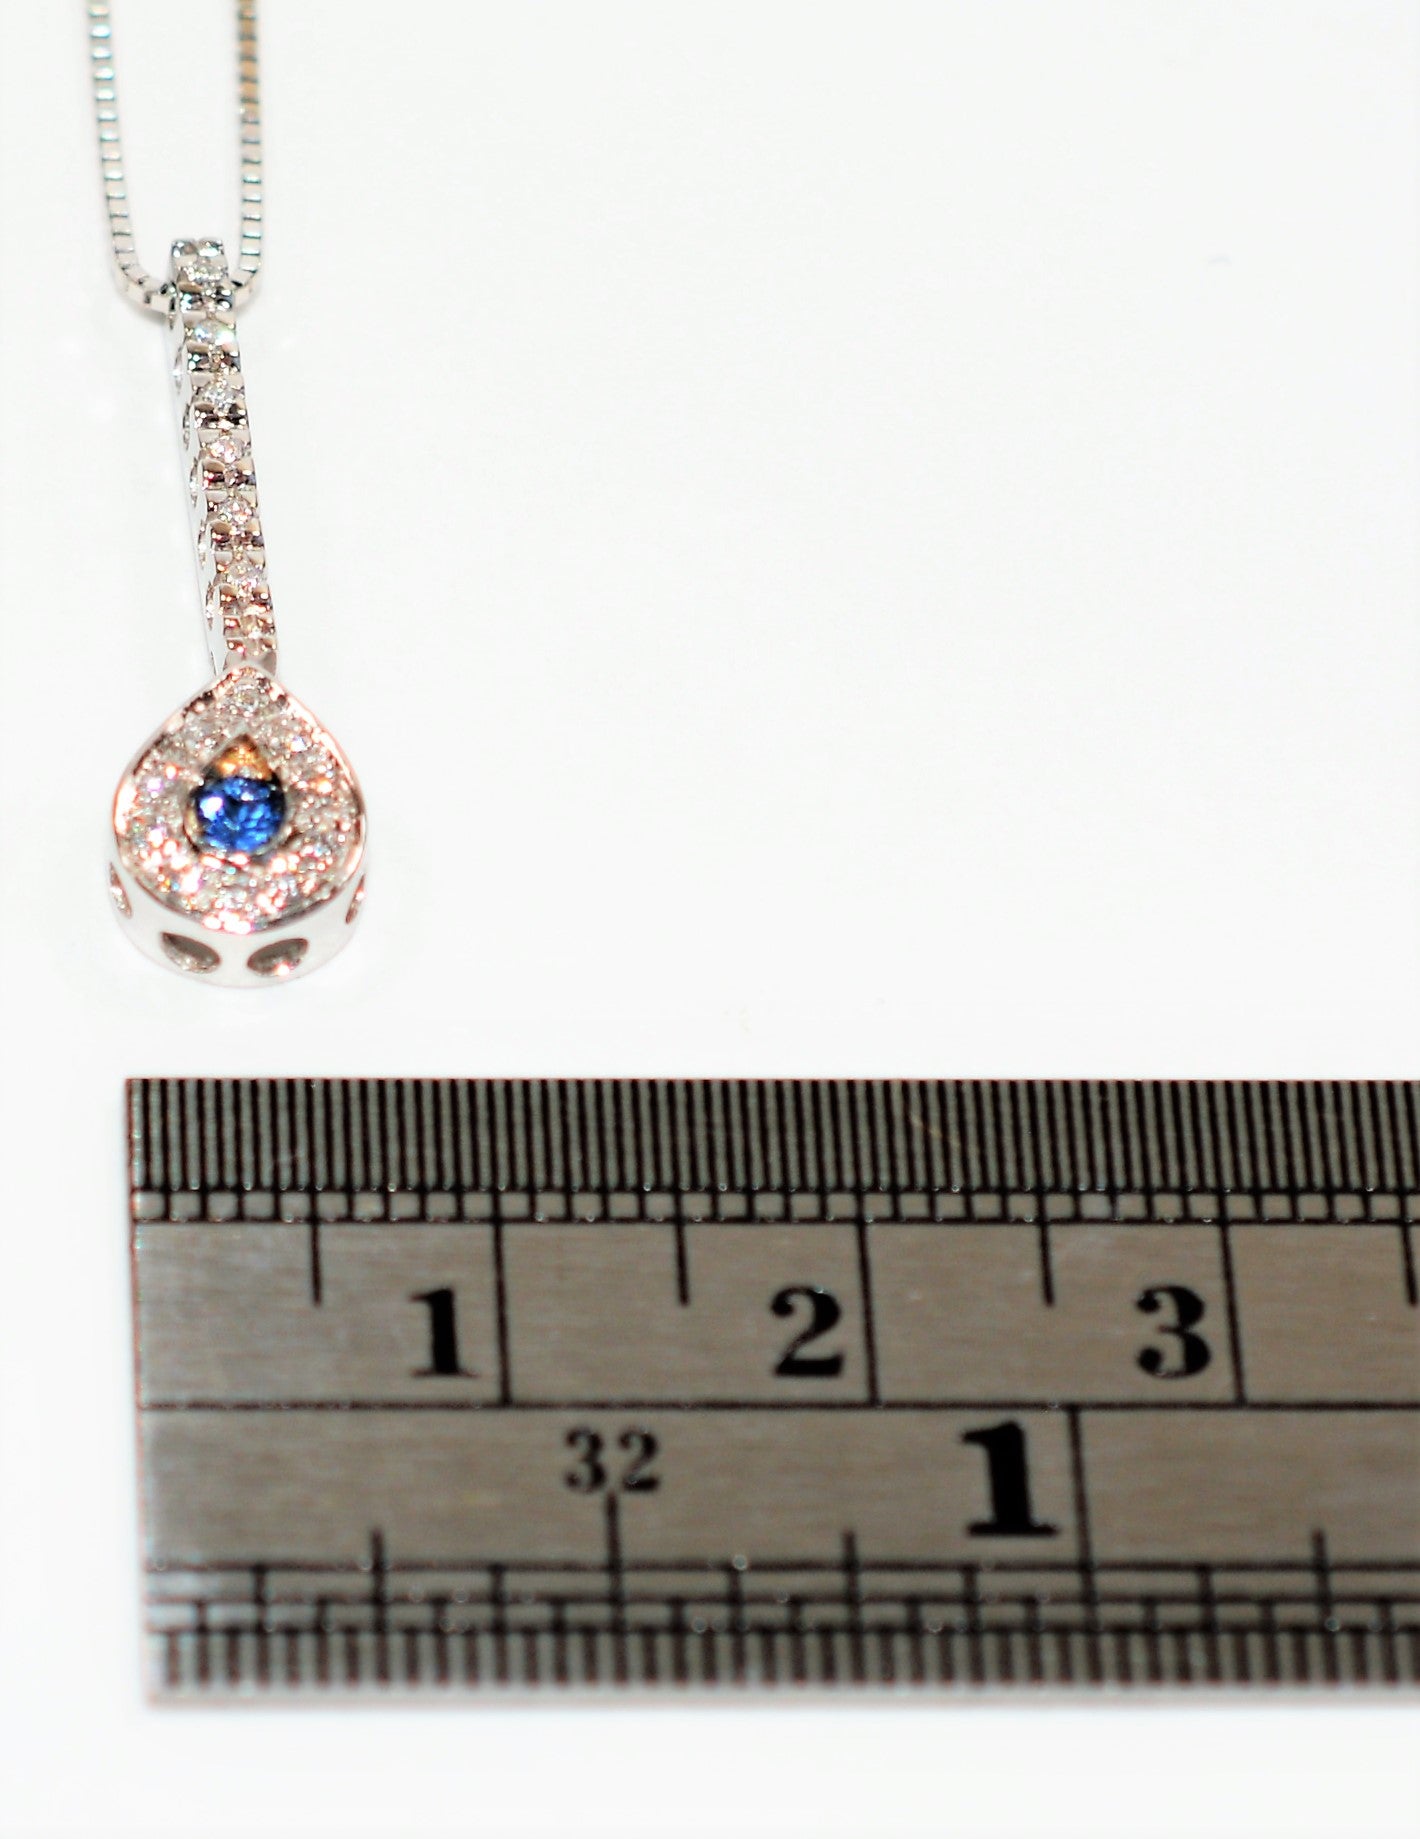 Natural Ceylon Sapphire & Diamond Necklace 18K Solid White Gold .27tcw Sapphire Pendant Ceylon Necklace Birthstone Necklace Women's Necklace